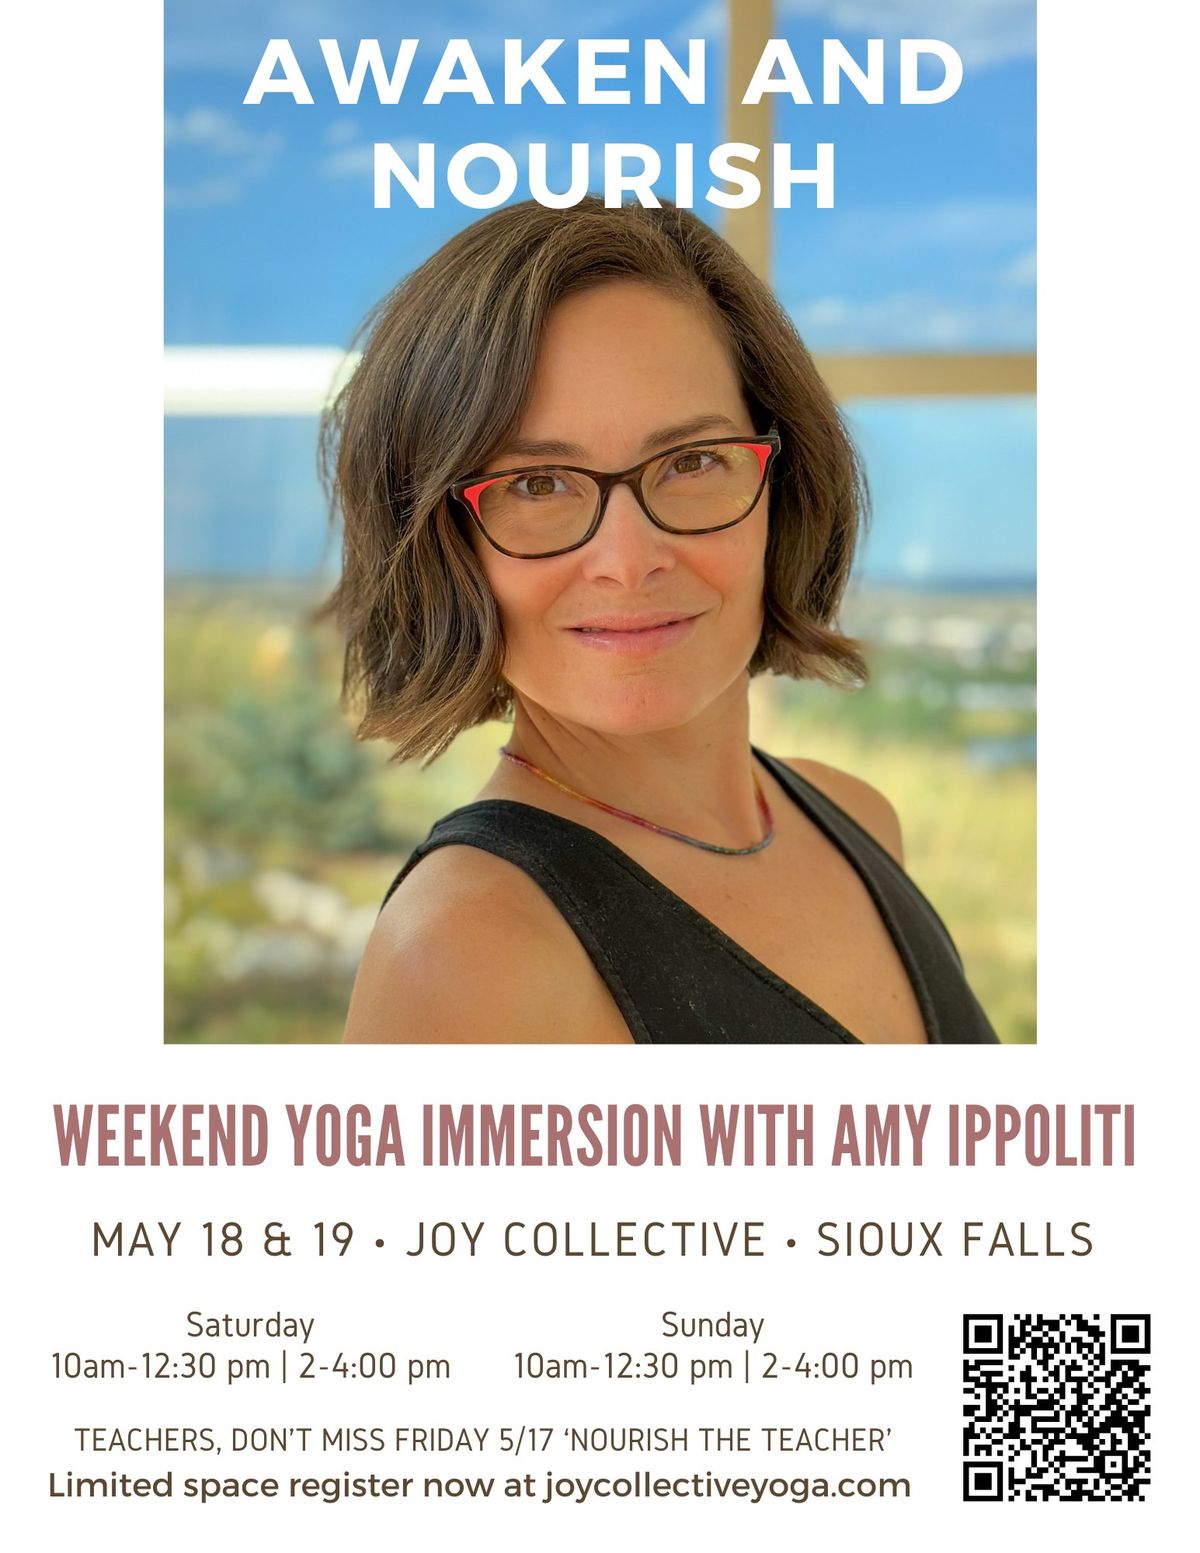 Awaken & Nourish: A weekend yoga immersion with Amy Ippoliti